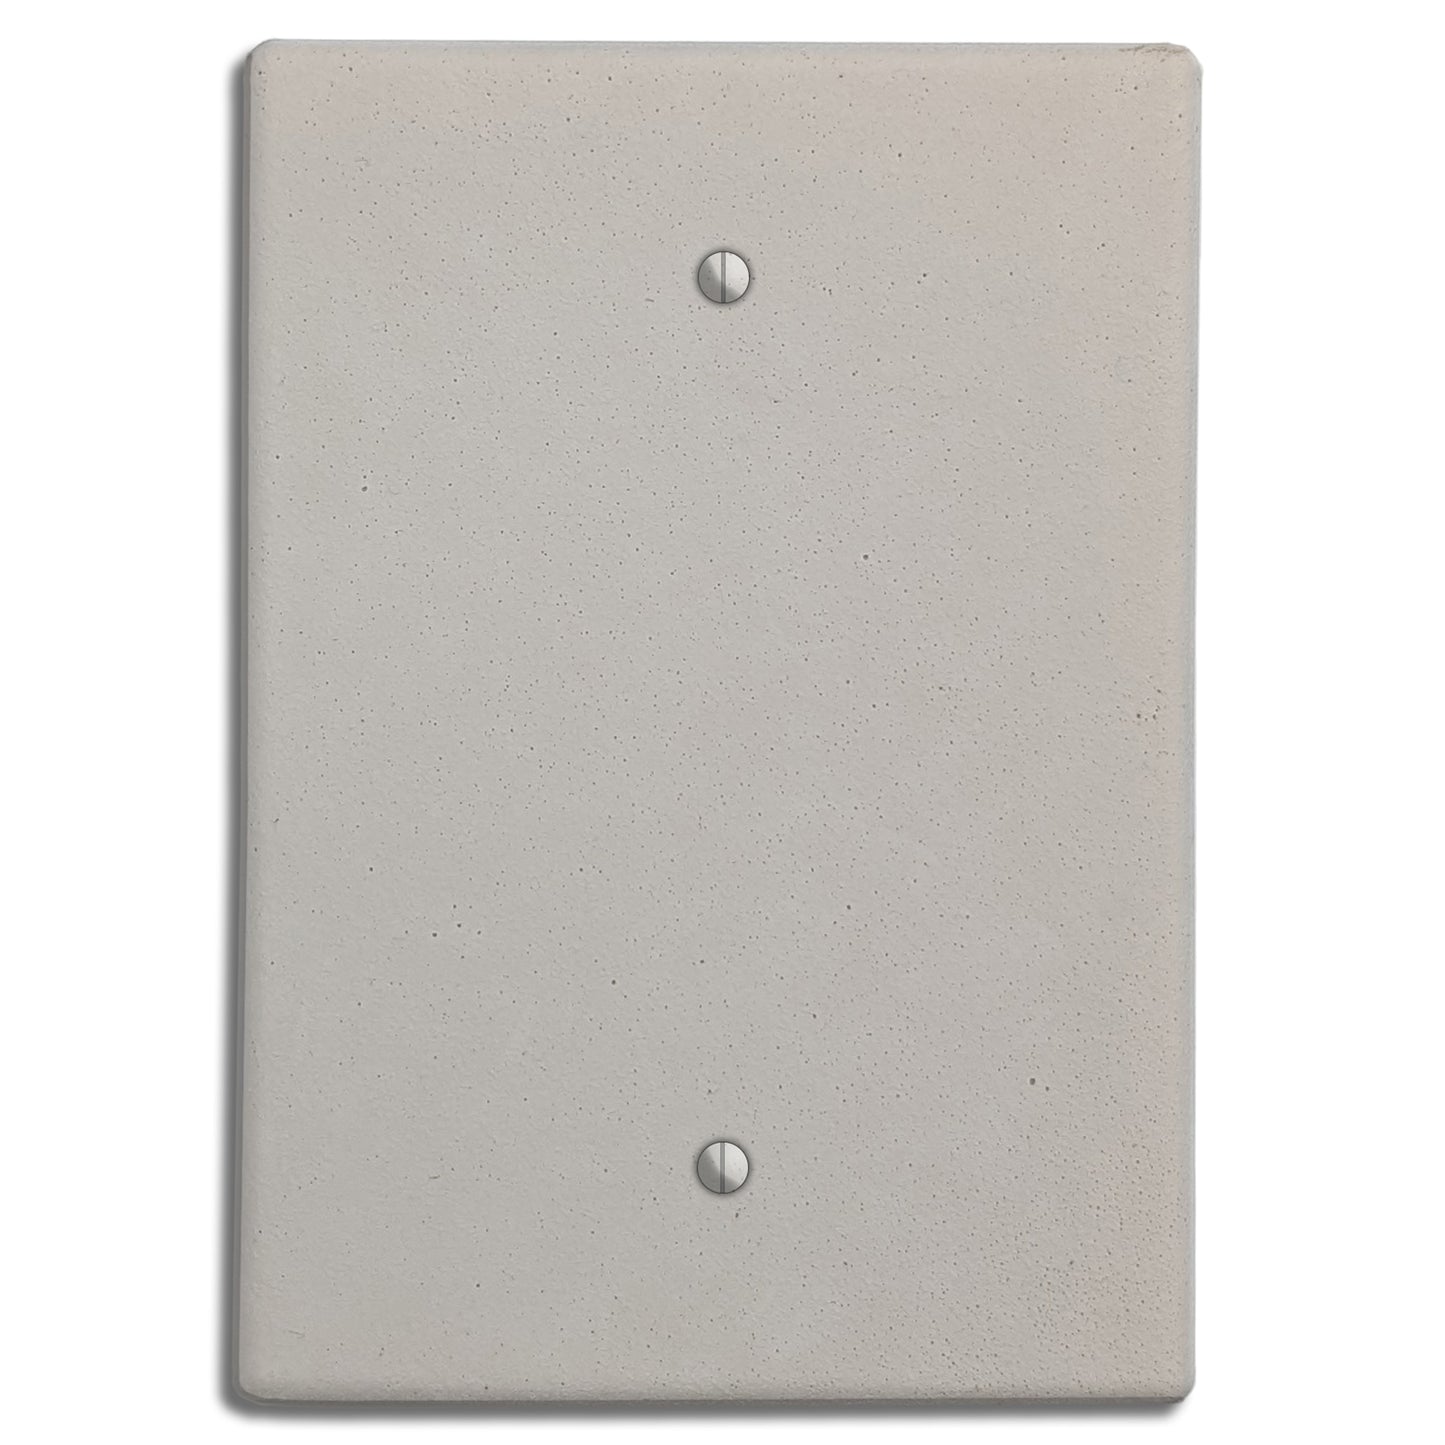 White Boho Smooth Single Blank Cover Plate